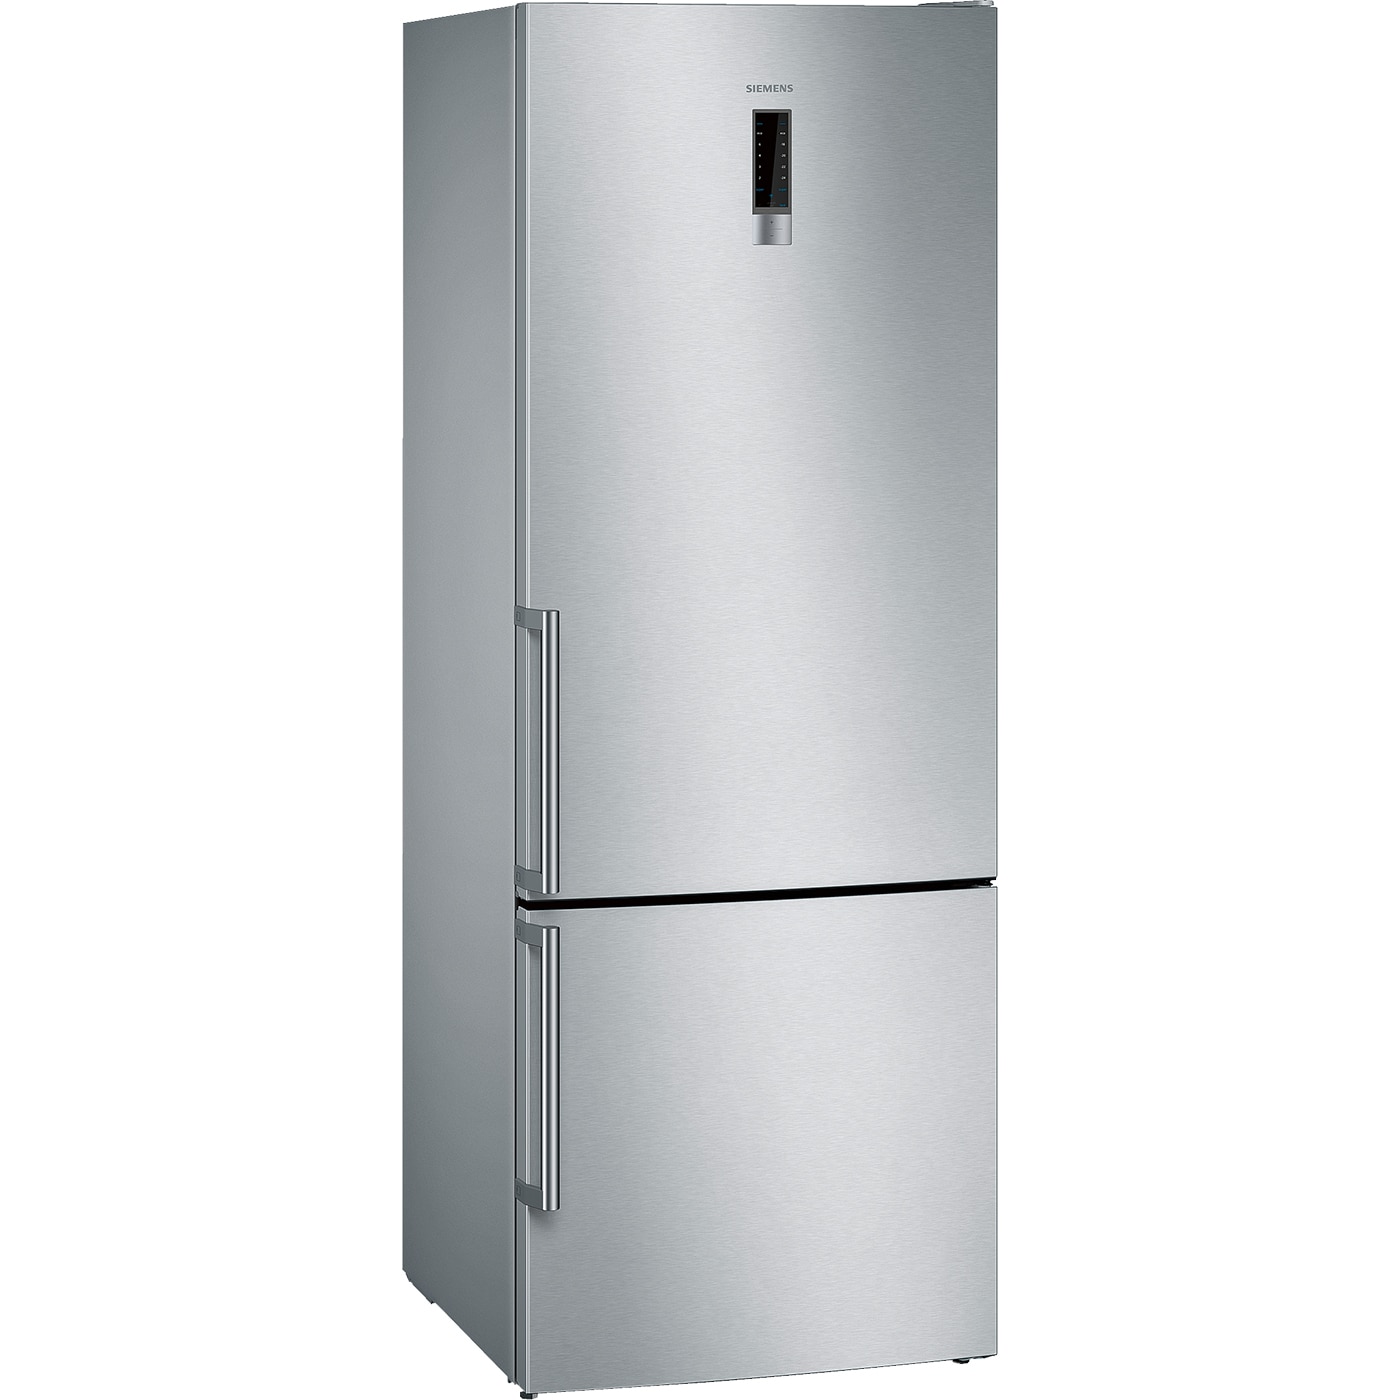 Хладилник Siemens KG56NXI40 с обем от 505 л.